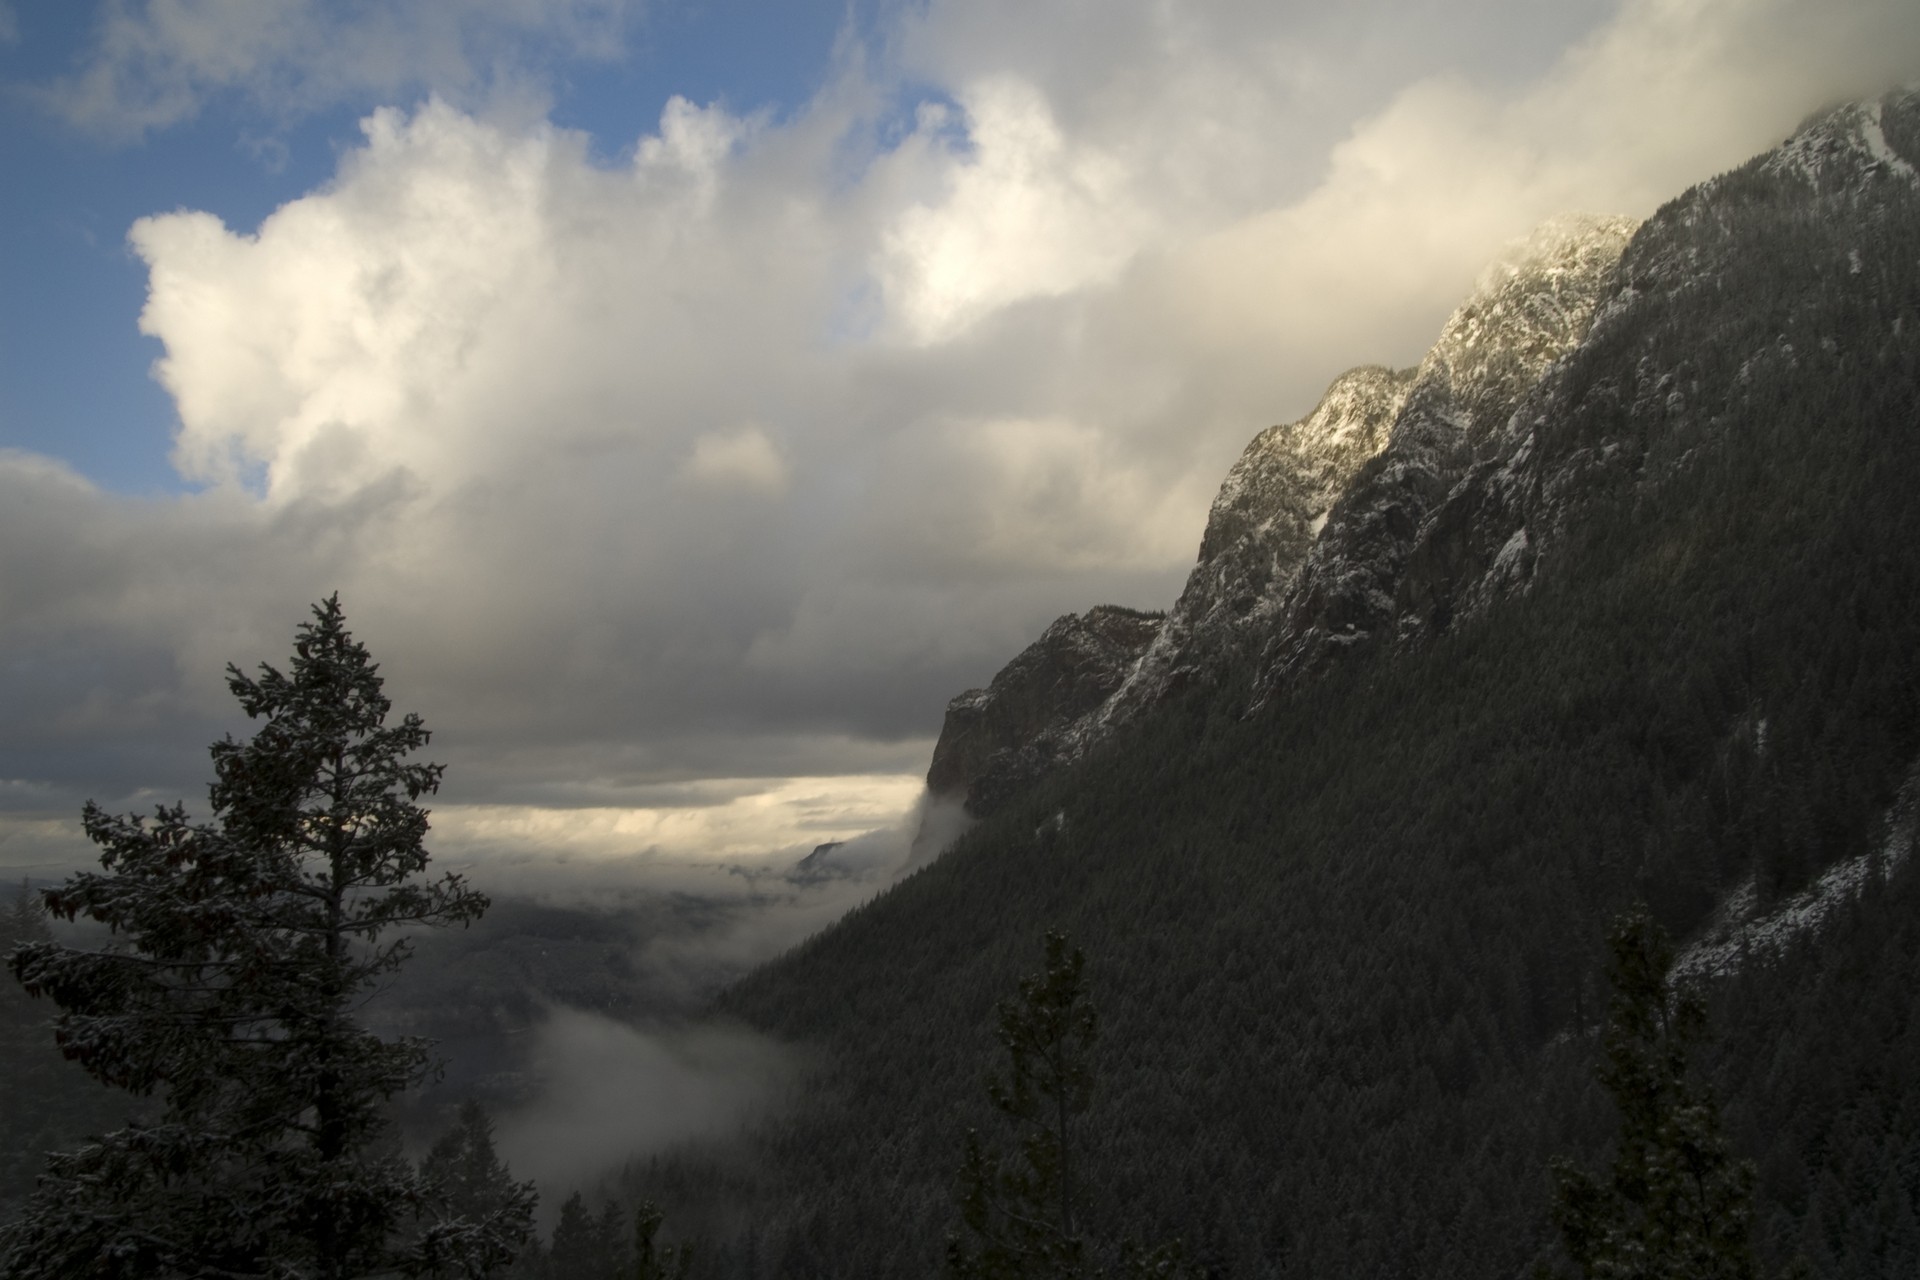 General 1920x1280 nature landscape mountains forest mist clouds snowy peak sunlight sunset valley